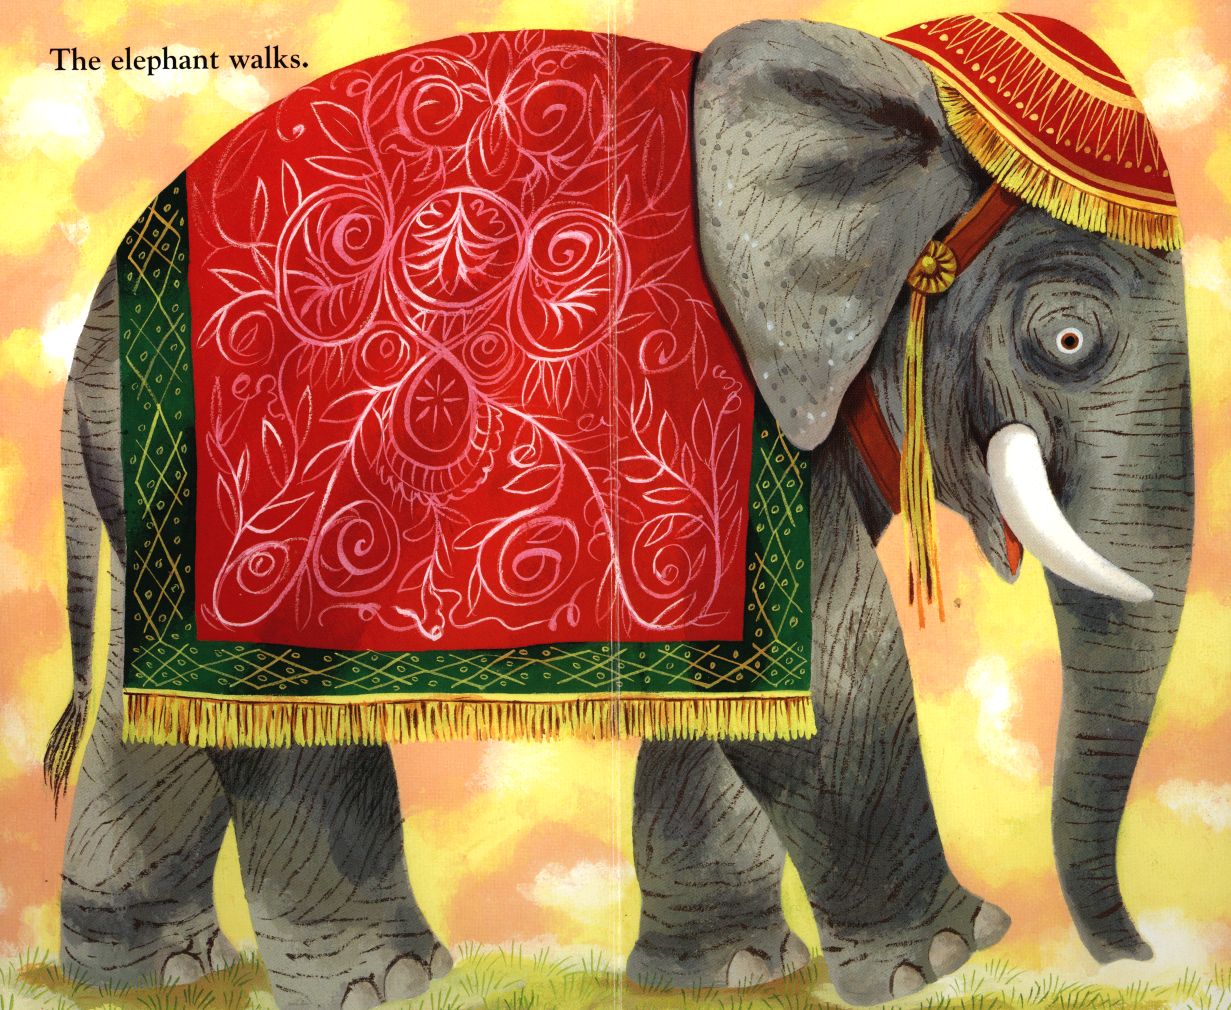 The elephant walks.